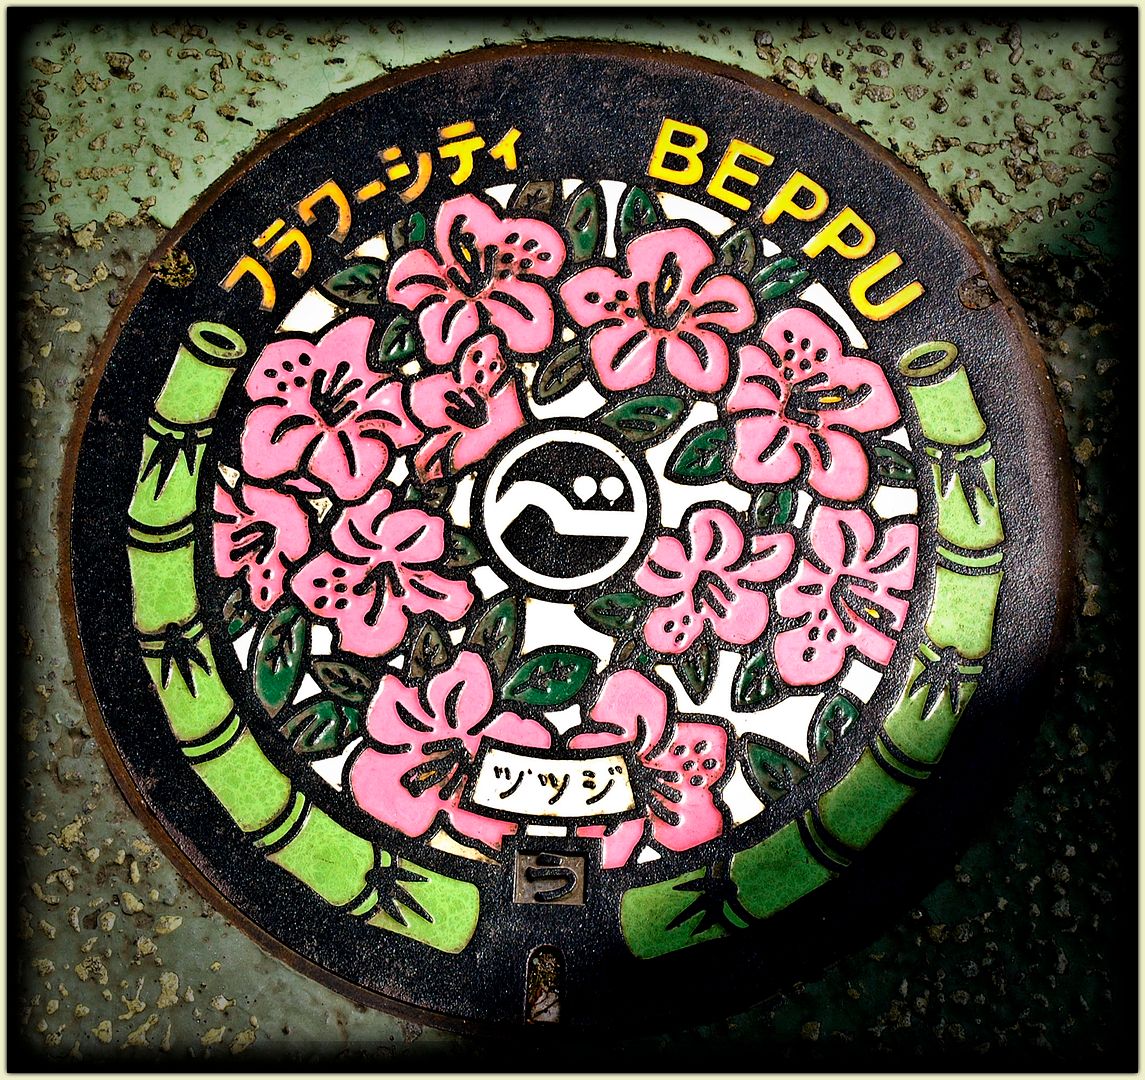 Beppu Manhole Cover